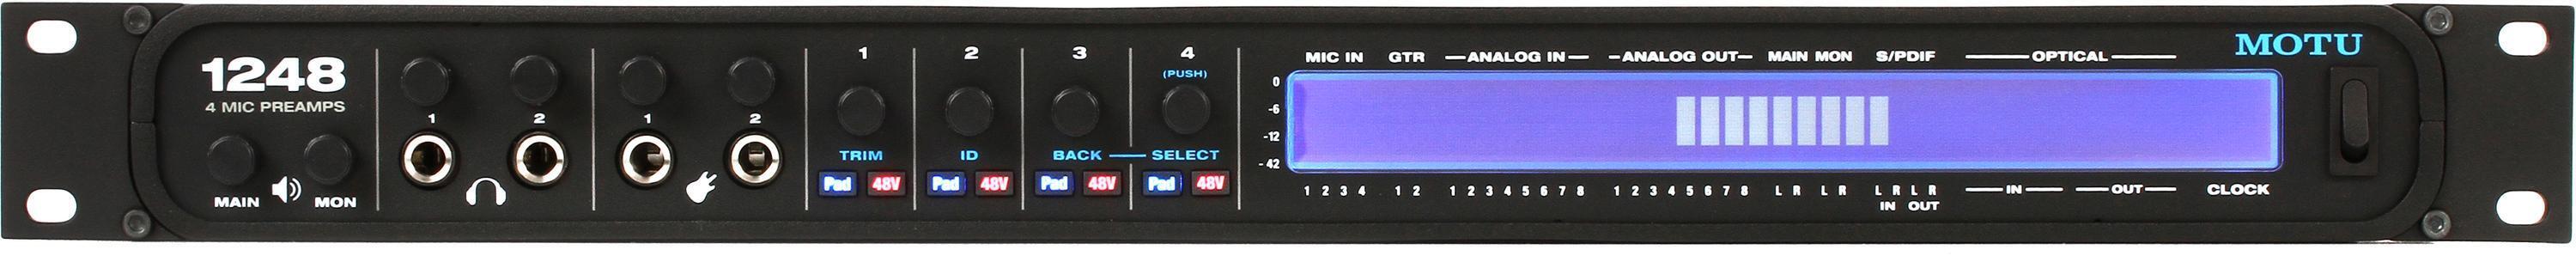 MOTU 1248 32x34 Thunderbolt / USB 2.0 Audio Interface with AVB 